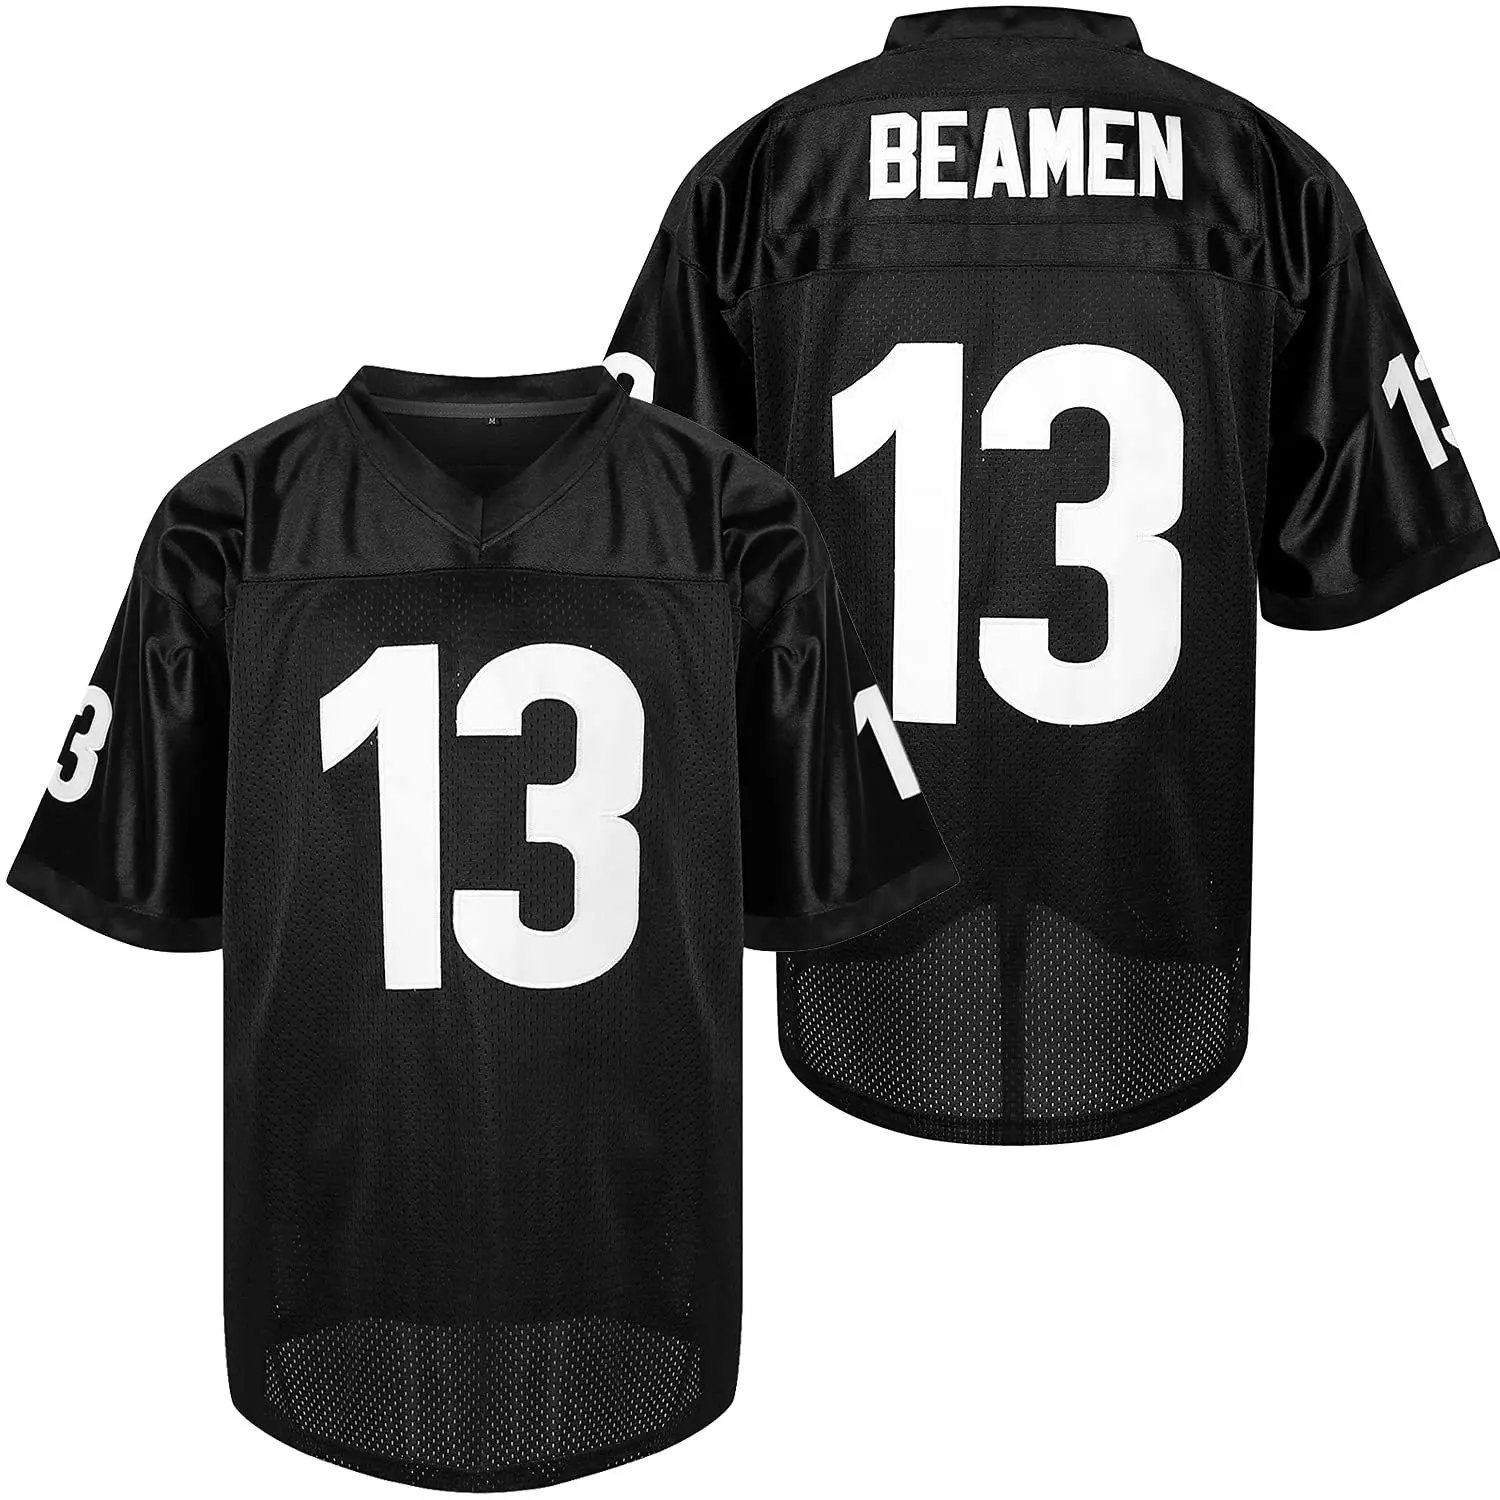 Willie Beamen#13. Męska koszulka piłkarska Any Given Sunday Sharks Movie All Stitched Black S-3XL Wysoka jakość